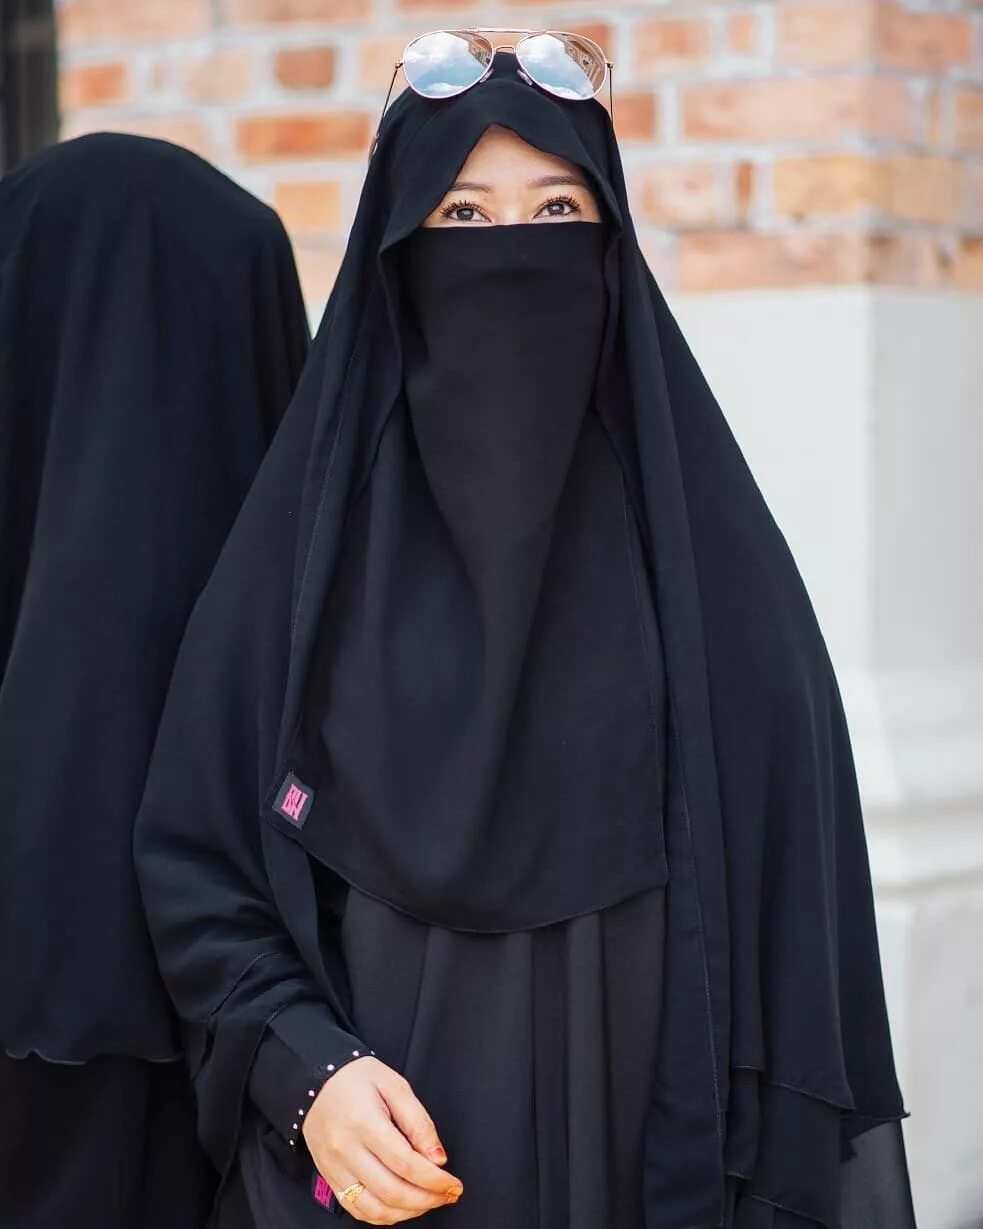 Чадра паранджа и никаб. Хиджаб паранджа чадра никаб. Абайя и никаб. Бурка хиджаб никаб паранджа.